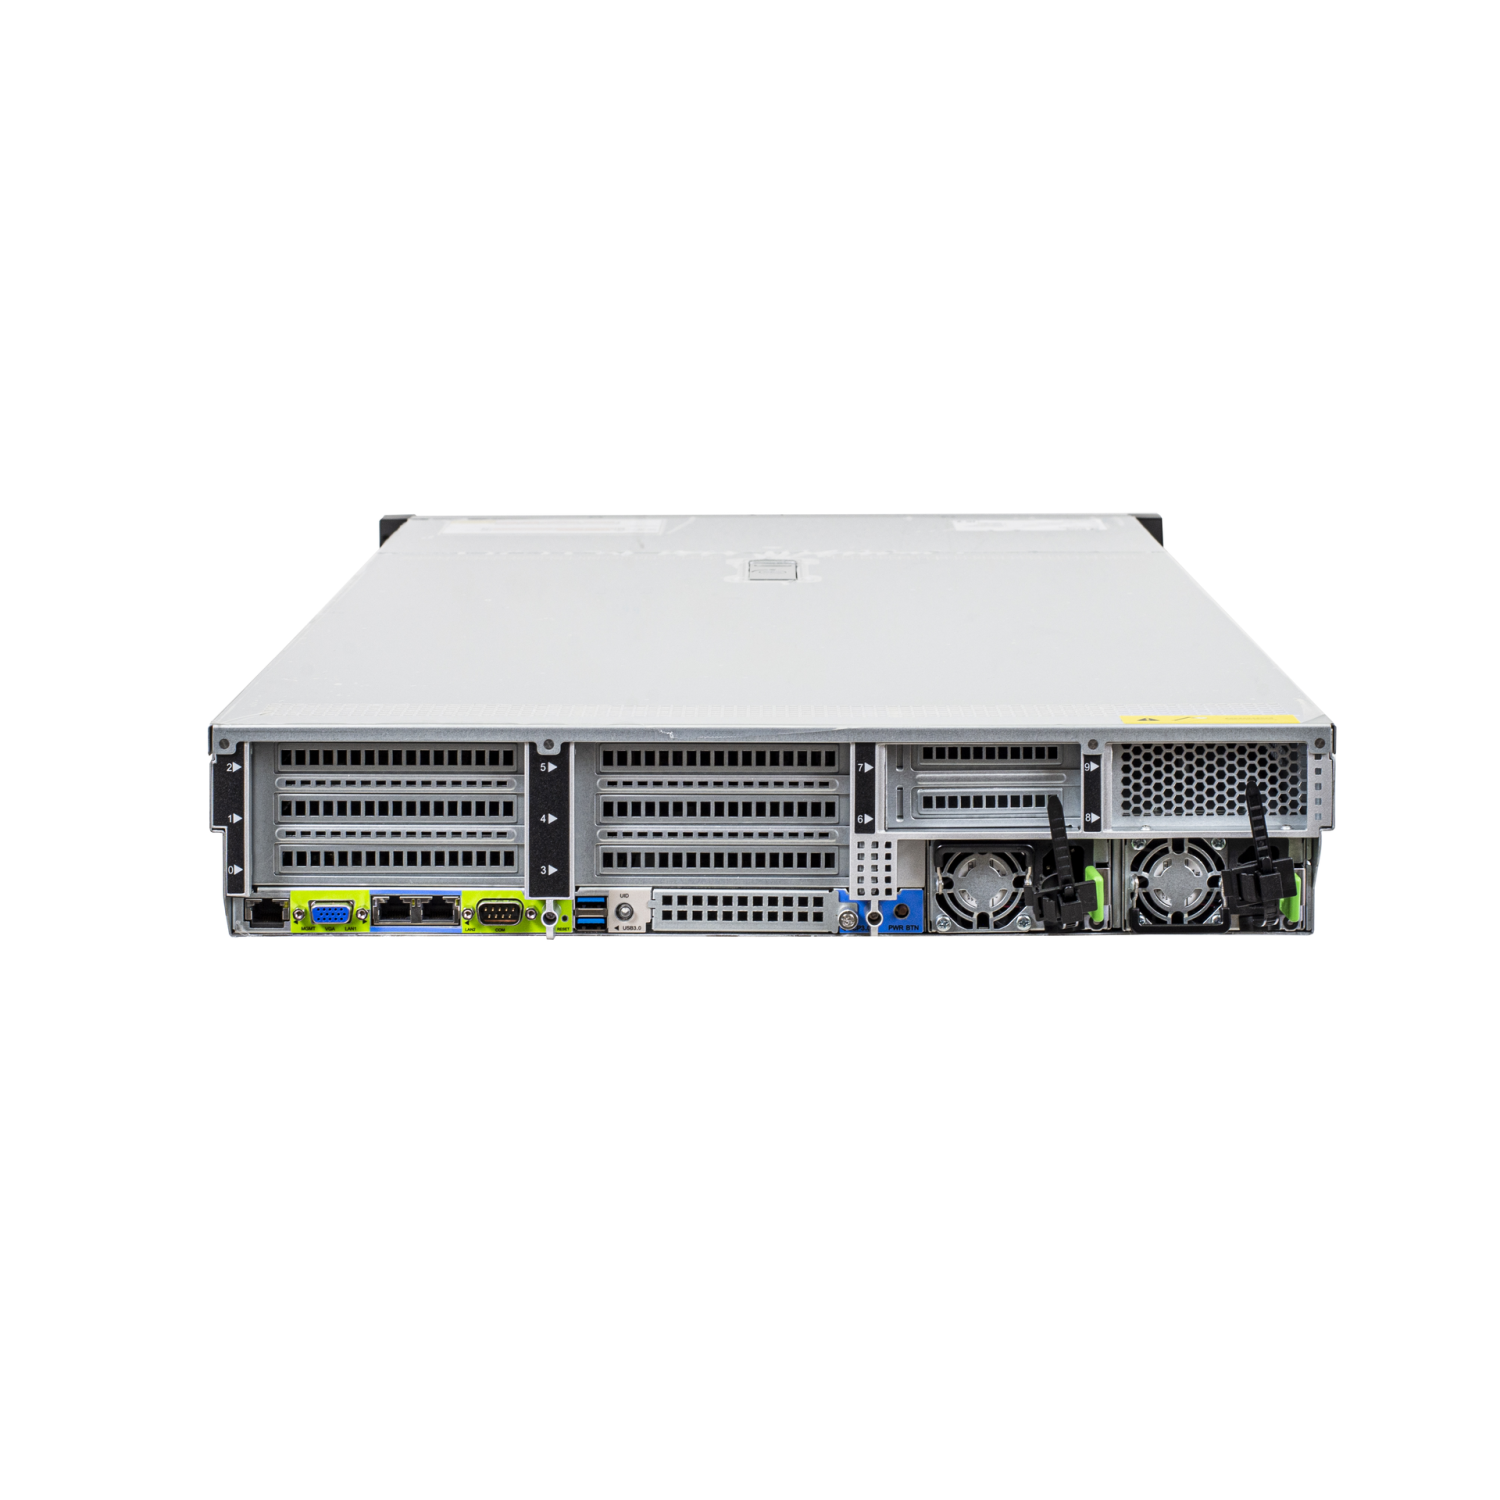 Серверная платформа SNR-SR2225RE, 2U, AMD EPYC, DDR4, 25xHDD, резервируемый БП